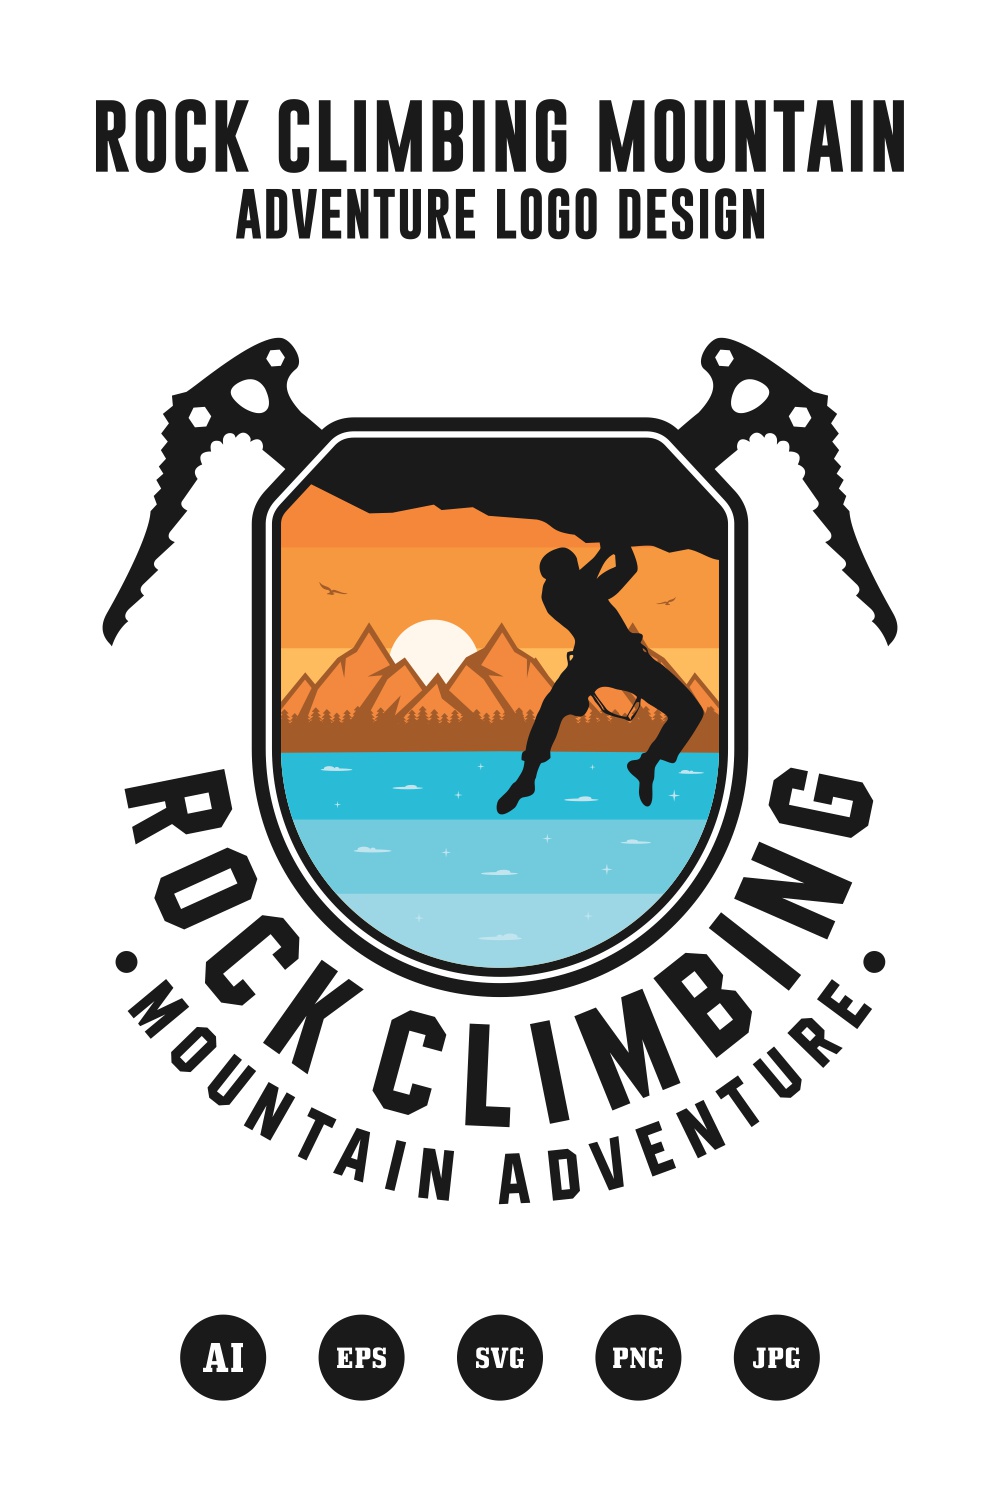 Rock Climbing mountain adventure logo - $5 pinterest preview image.